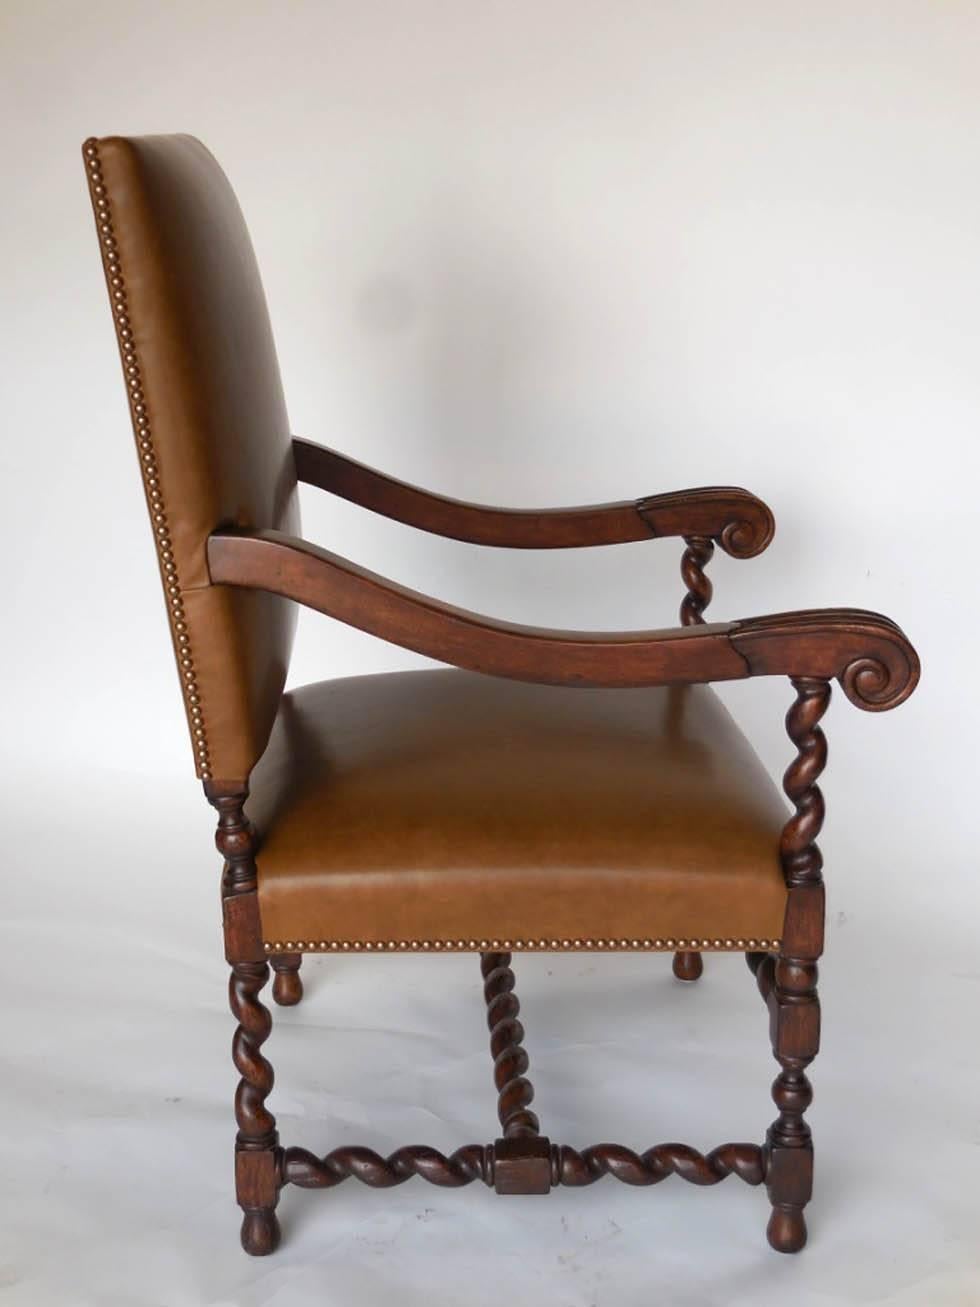 chair with a spiral leg